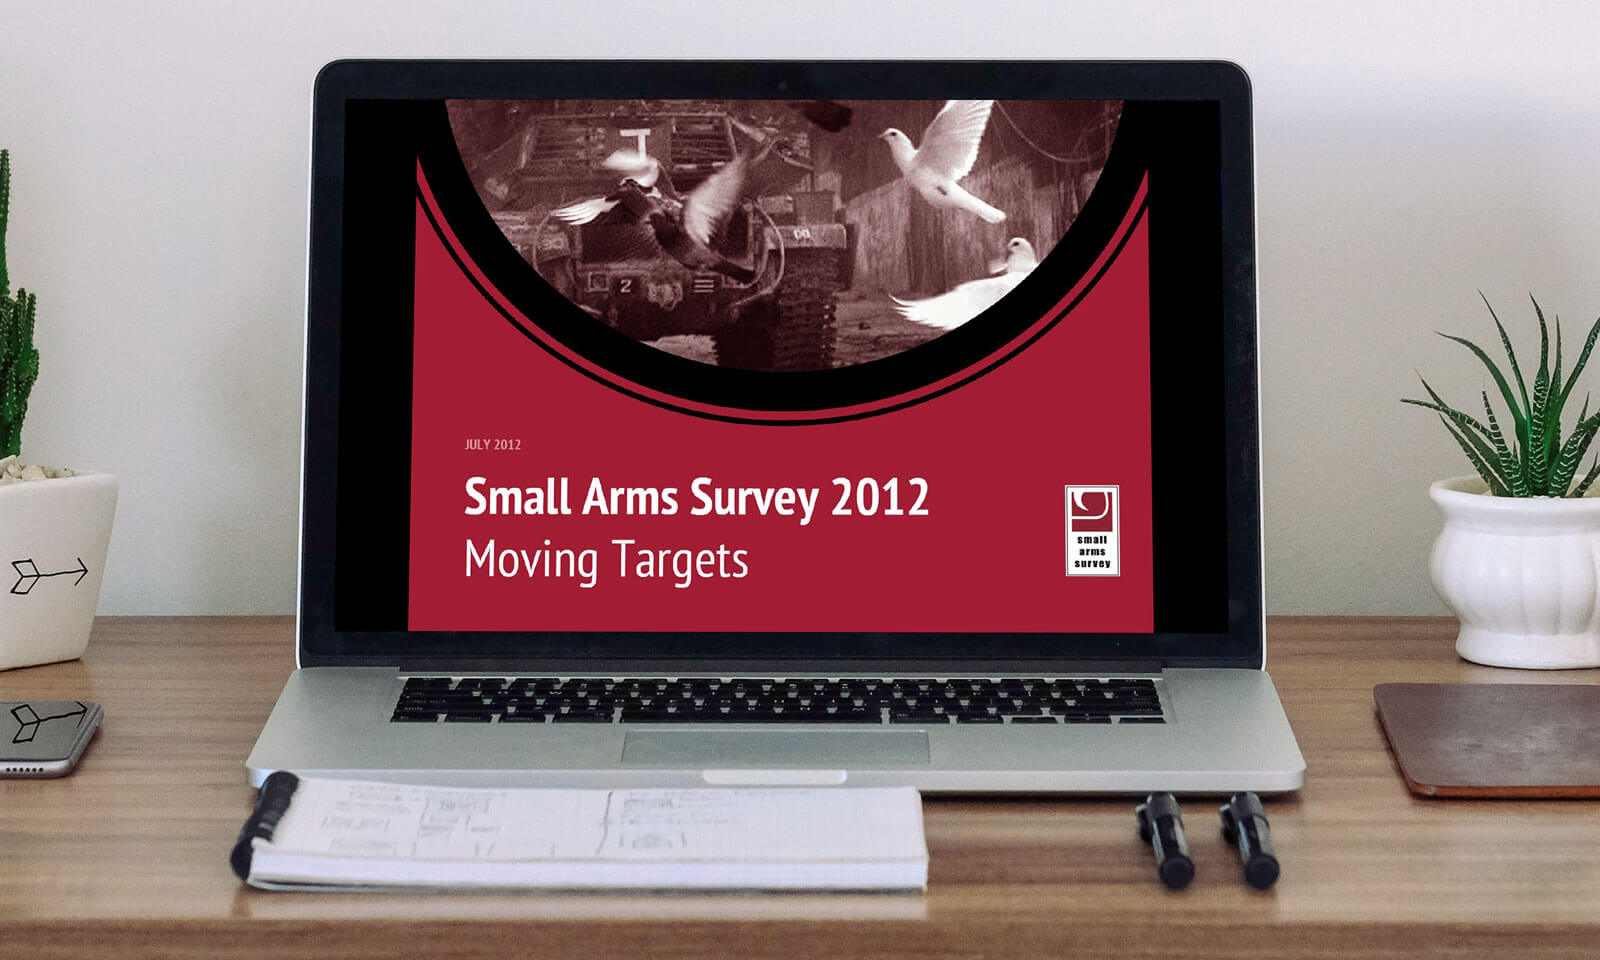 Small Arms Survey presentation